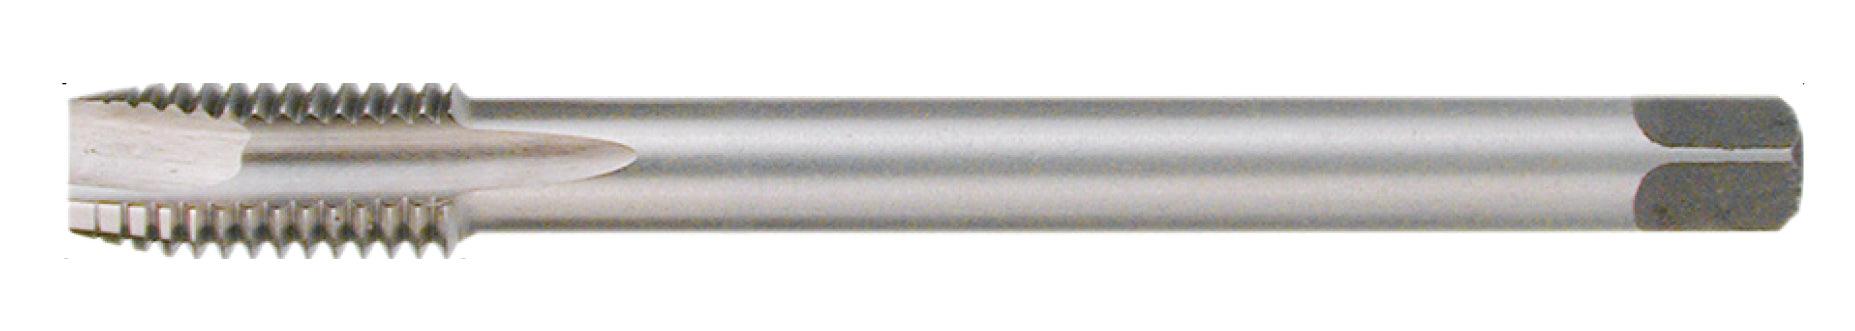 Labor Maschinengewindebohrer Durchgangslöcher M20 HSS 5% Kobalt DIN376B - SP232200 - Tools.de TP Profishop GmbH